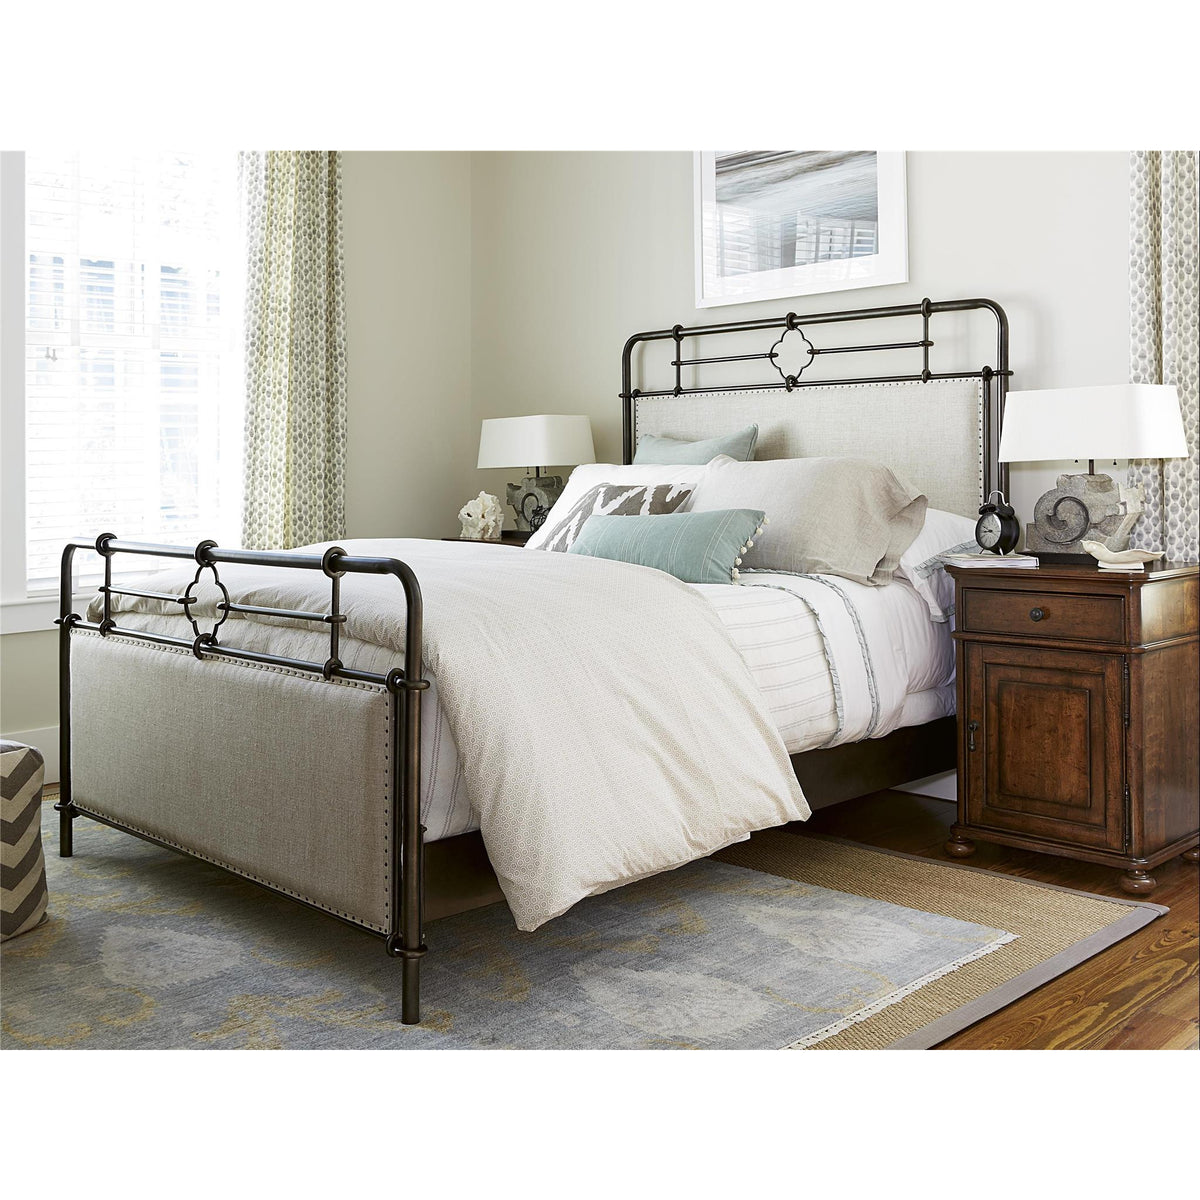 Upholstered Metal Bed - Be Bold Furniture